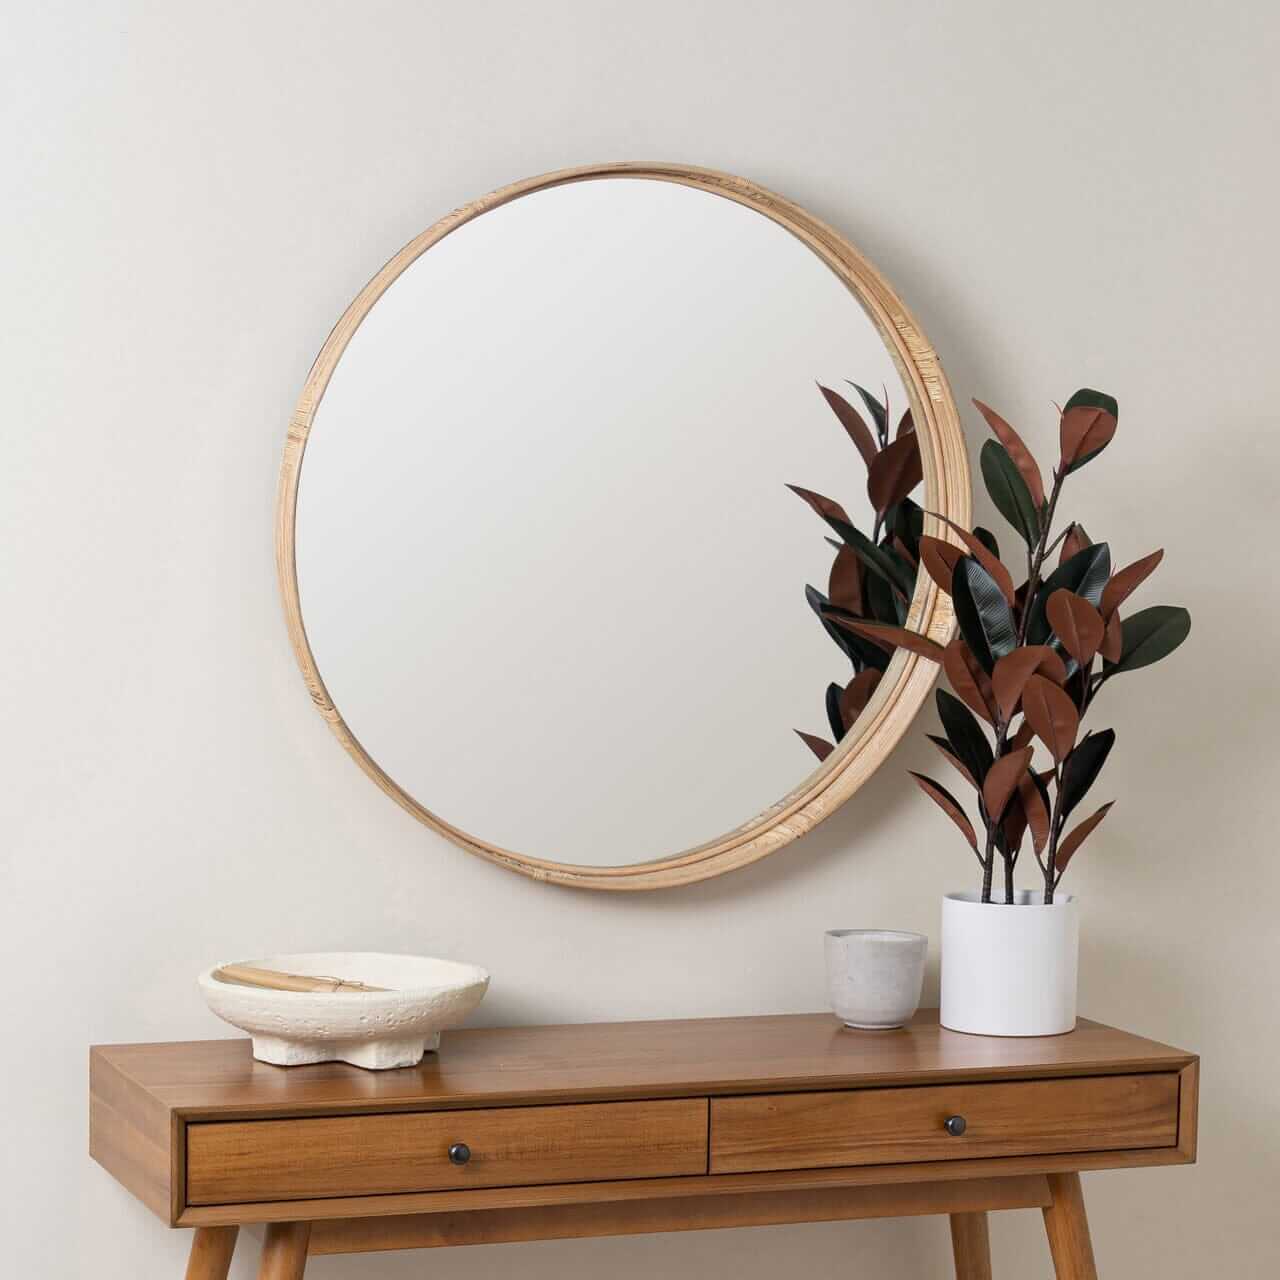 Wood-Framed Mirrors